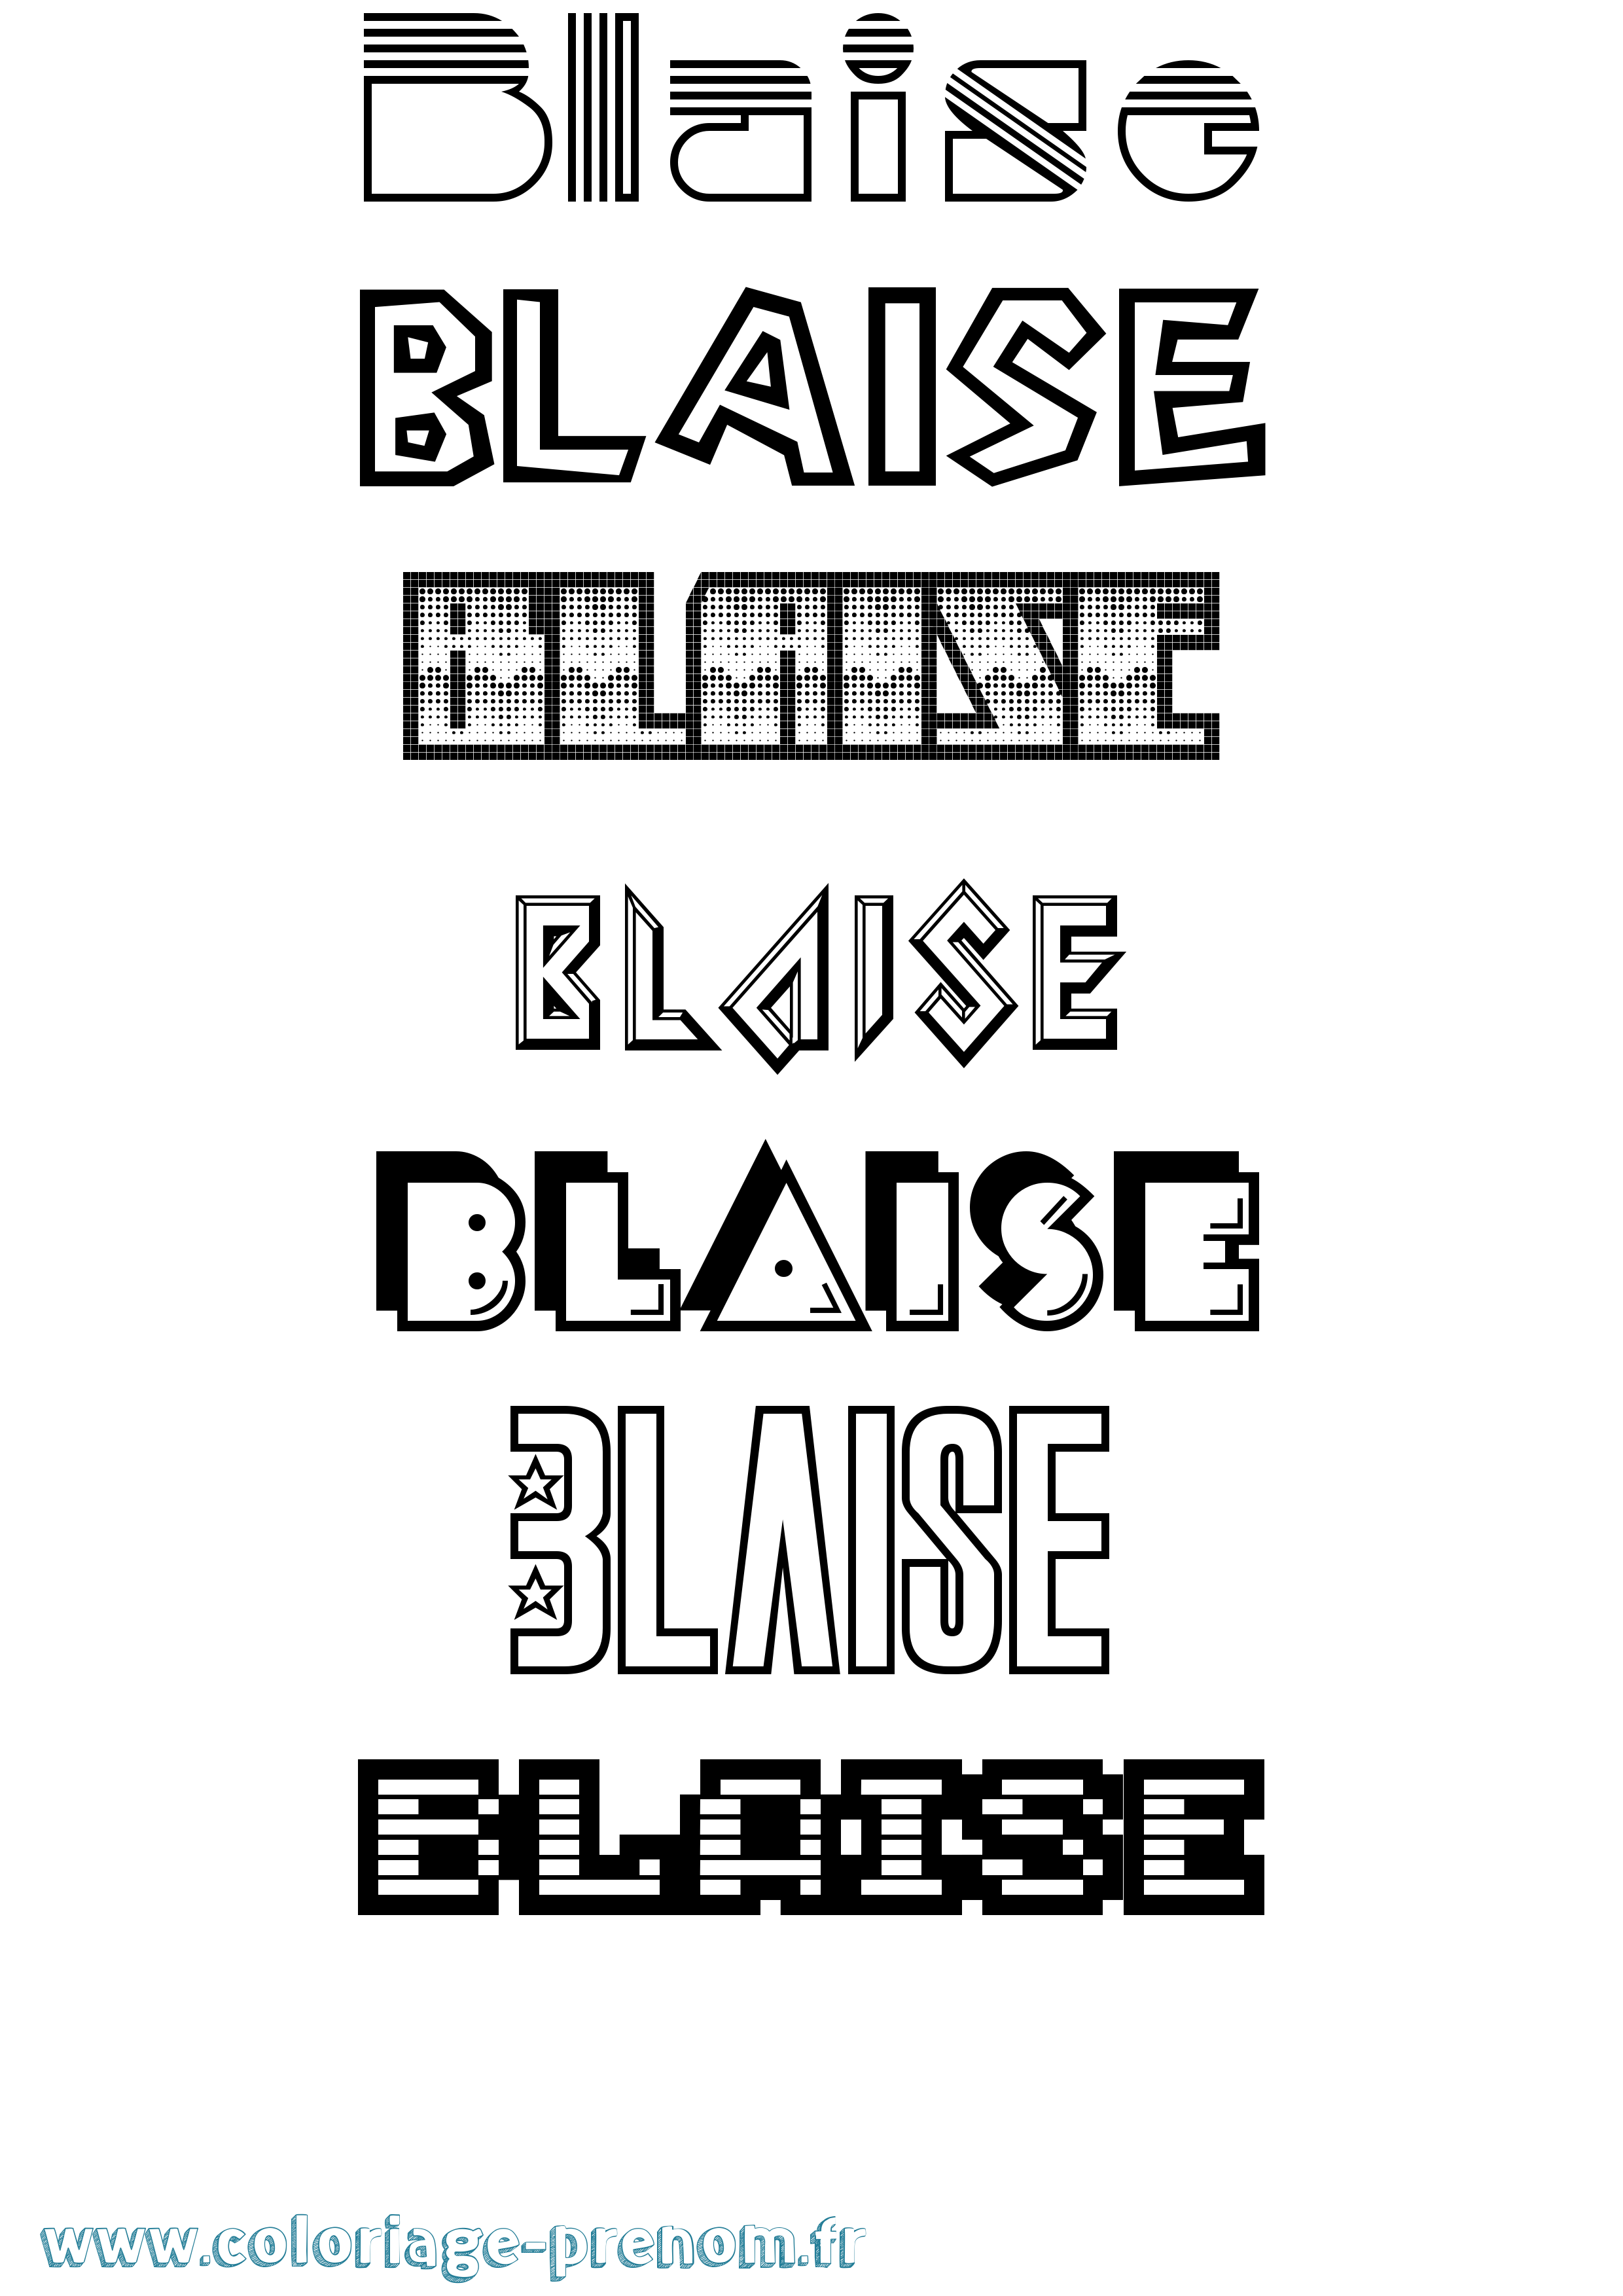 Coloriage prénom Blaise